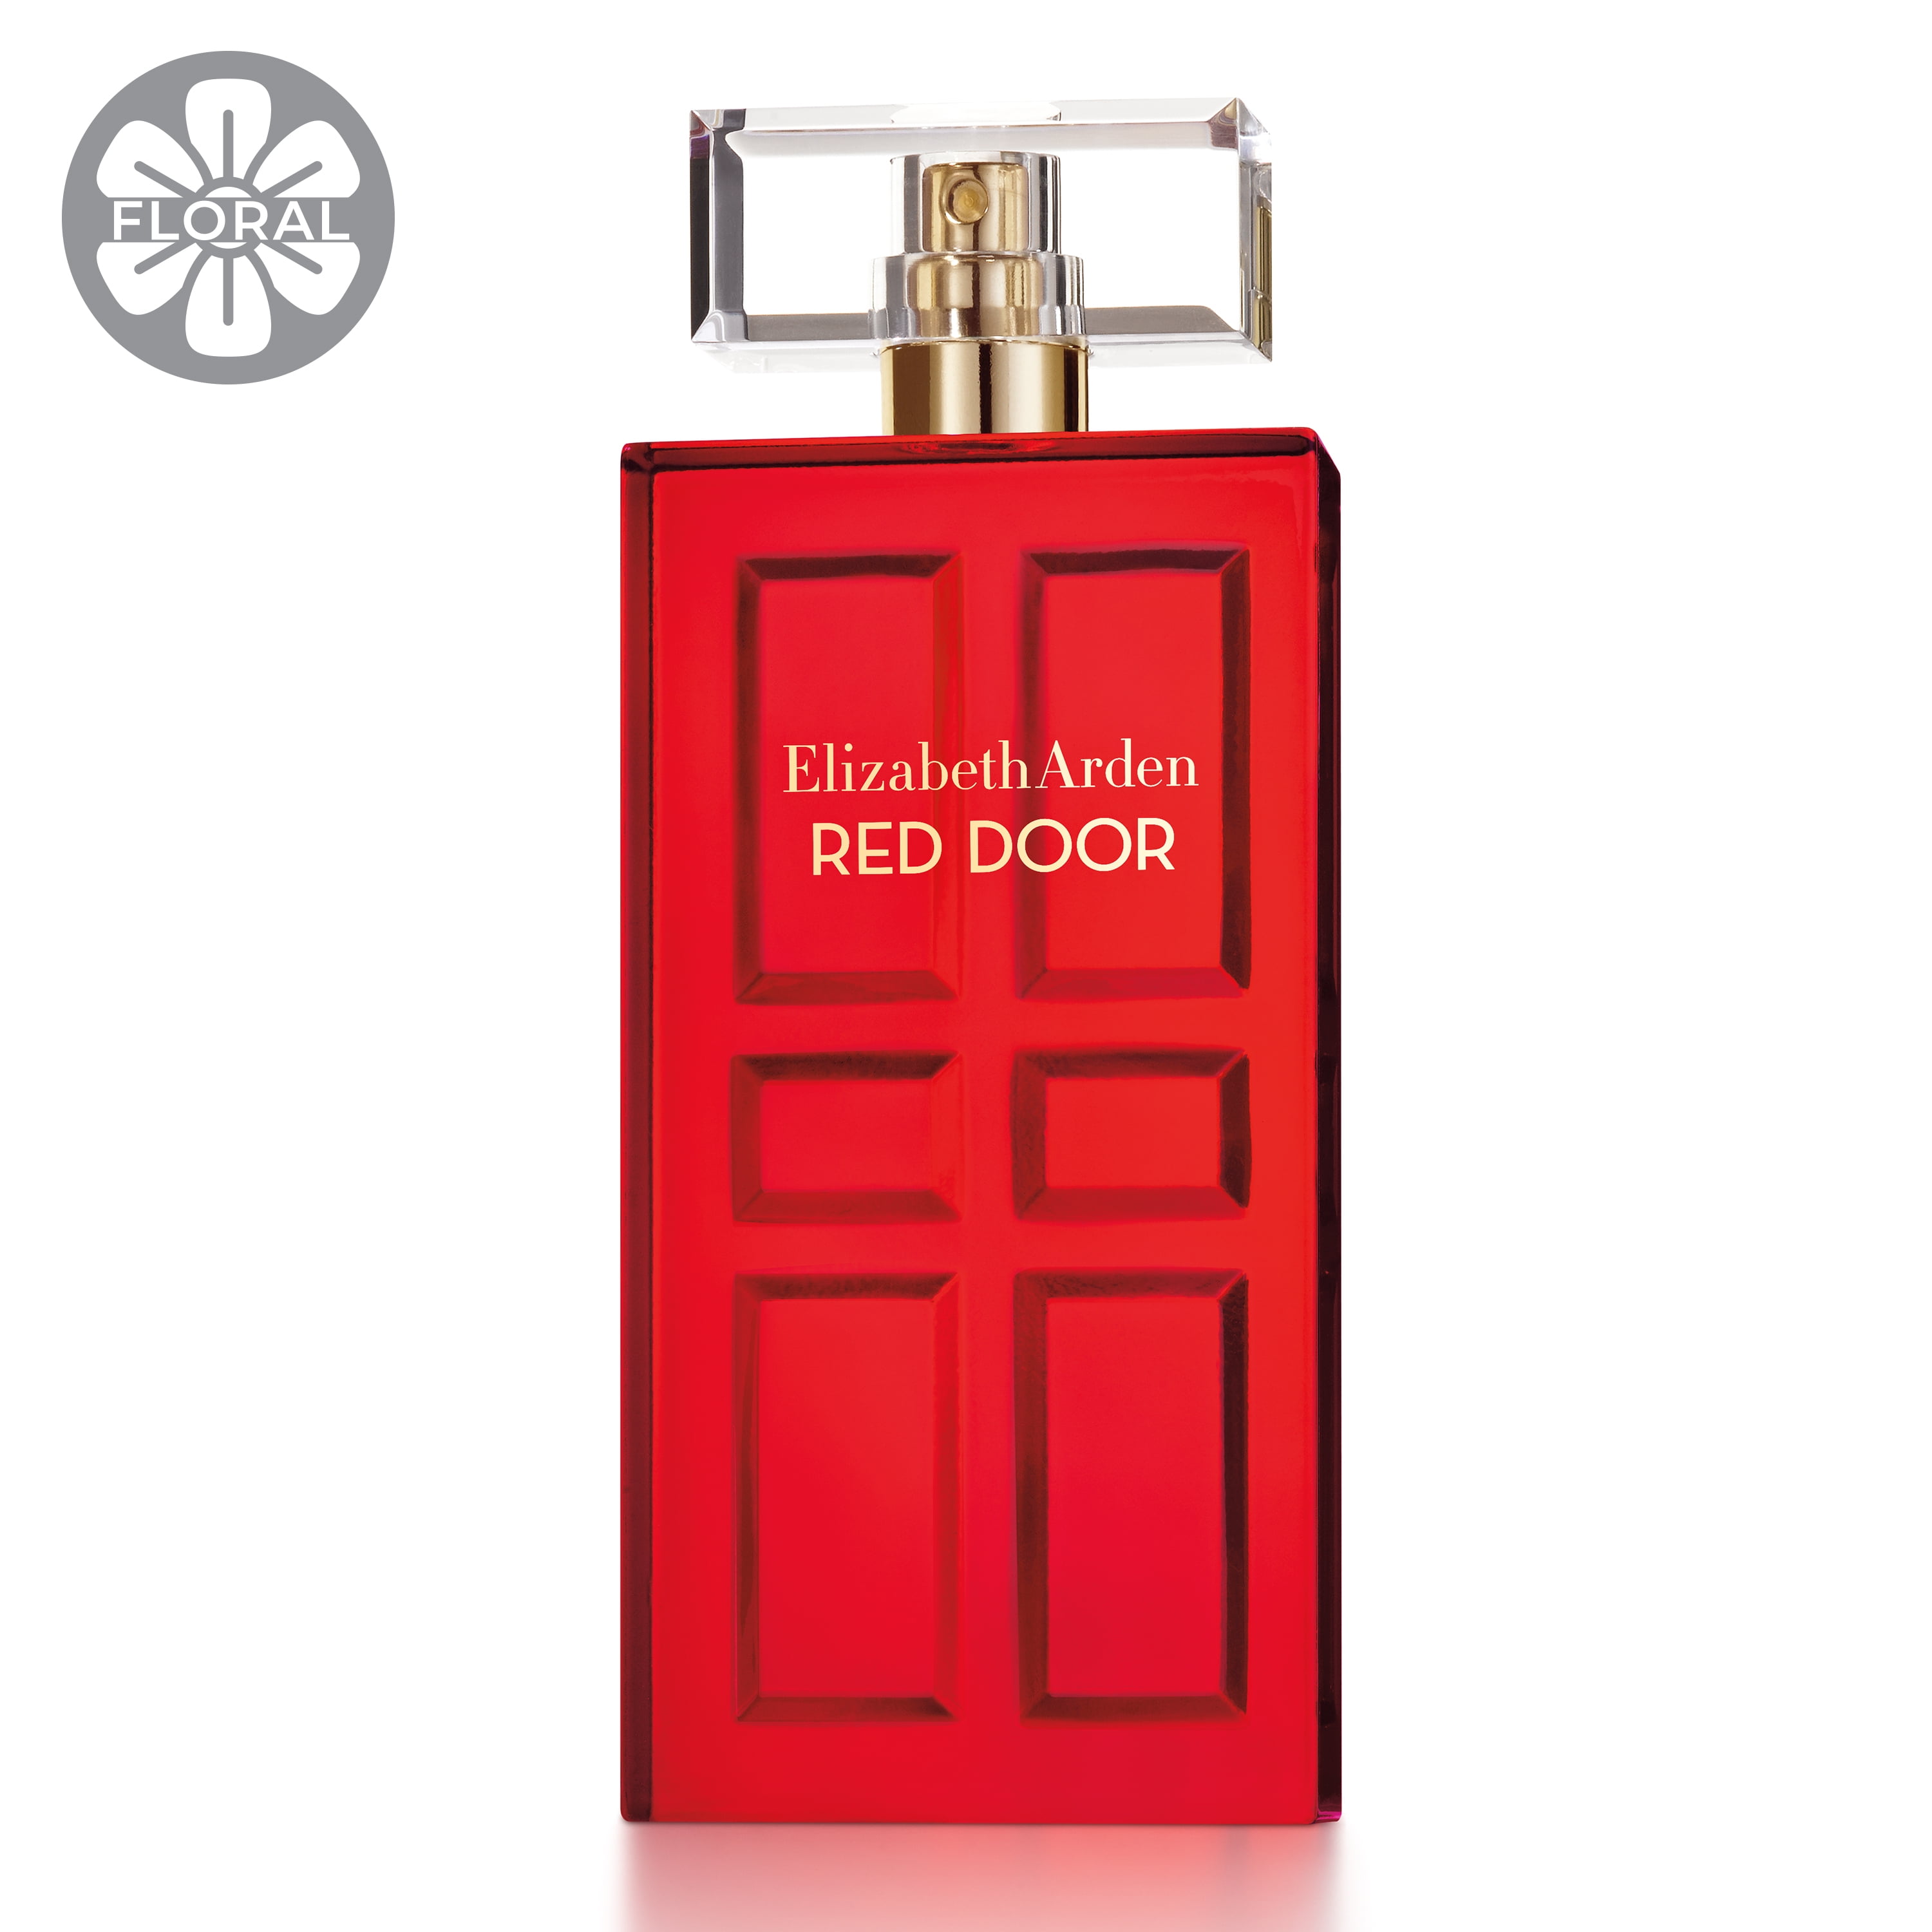 satellit kompensere smag Elizabeth Arden Red Door Eau de Toilette Spray Naturel, Perfume for Women,  3.3 fl oz - Walmart.com